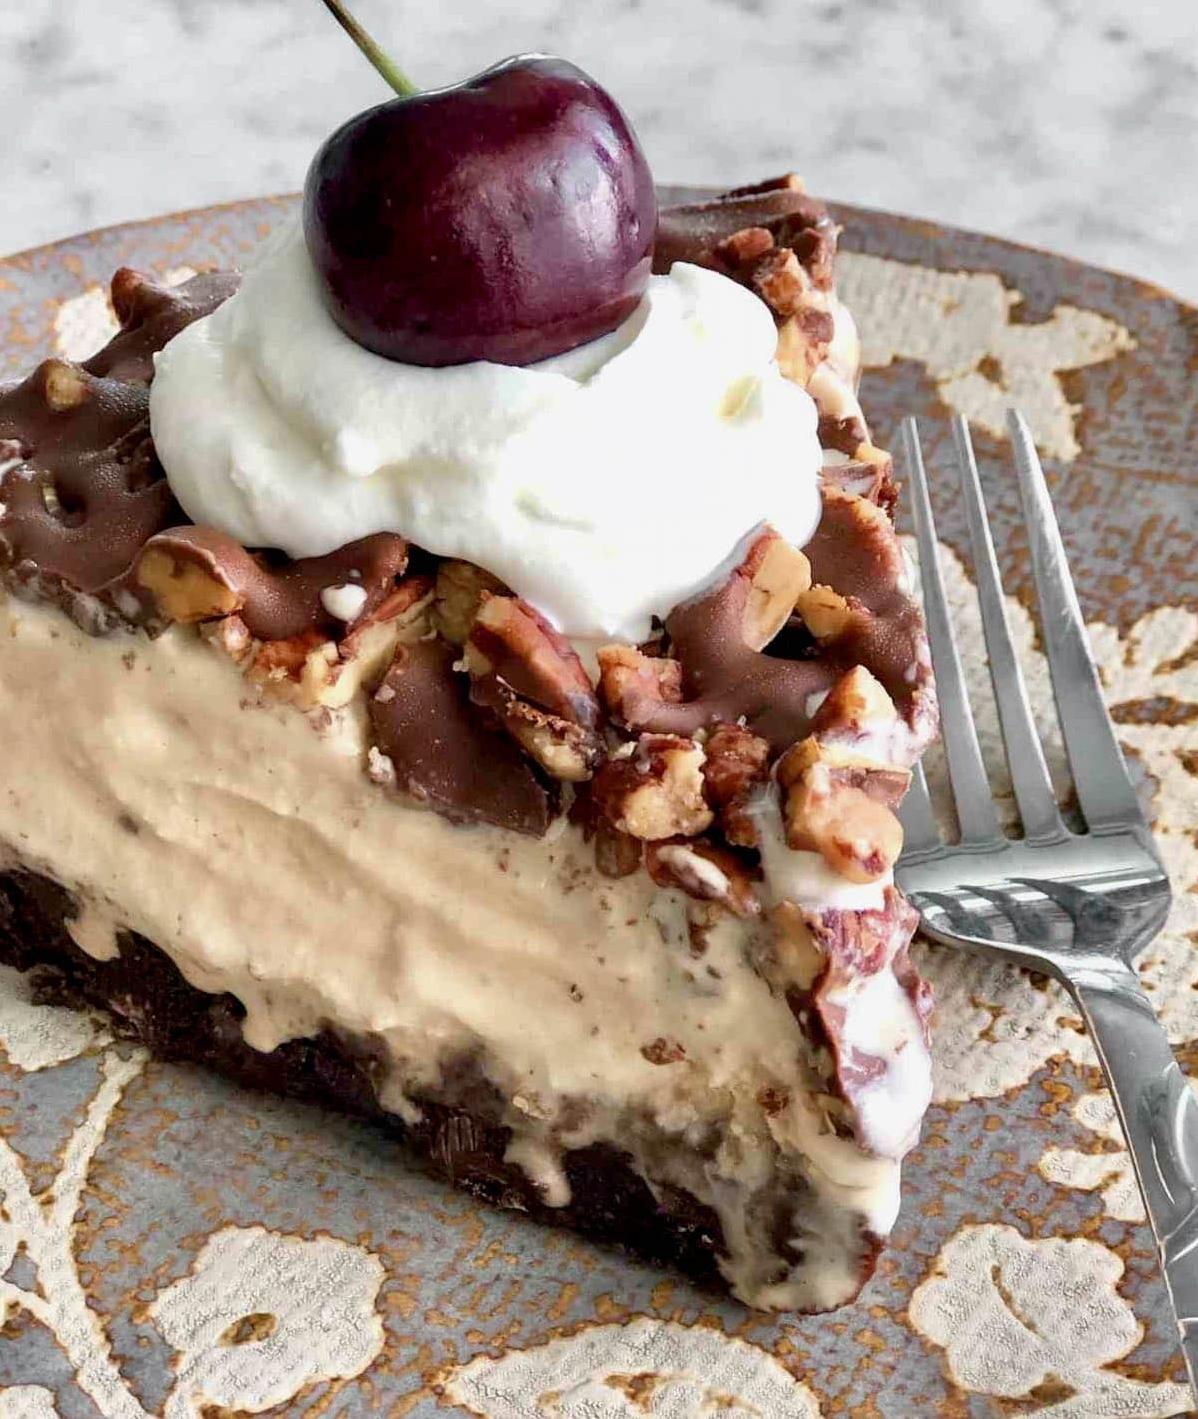  A coffee lover's dream dessert – Chocolate Mocha Latte Pie.